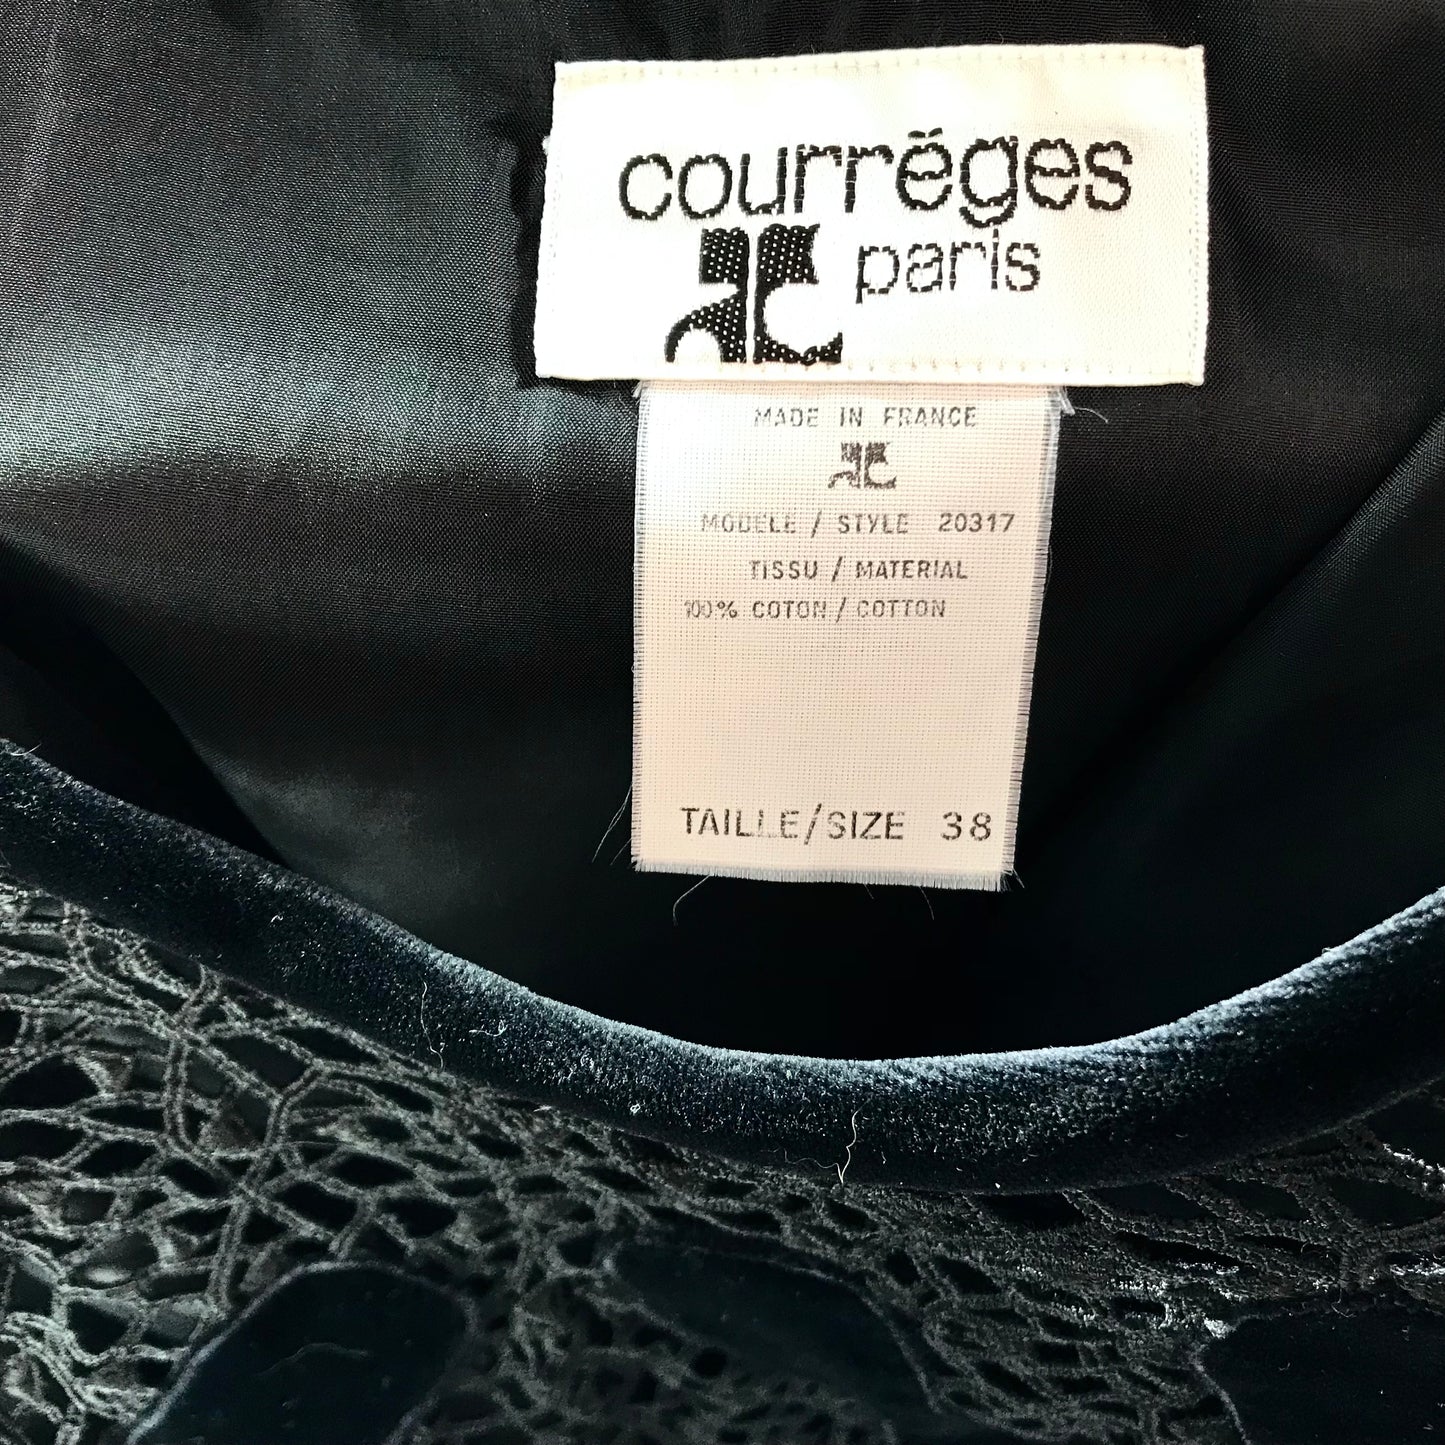 Courrèges evening dress in black velvet and guipure